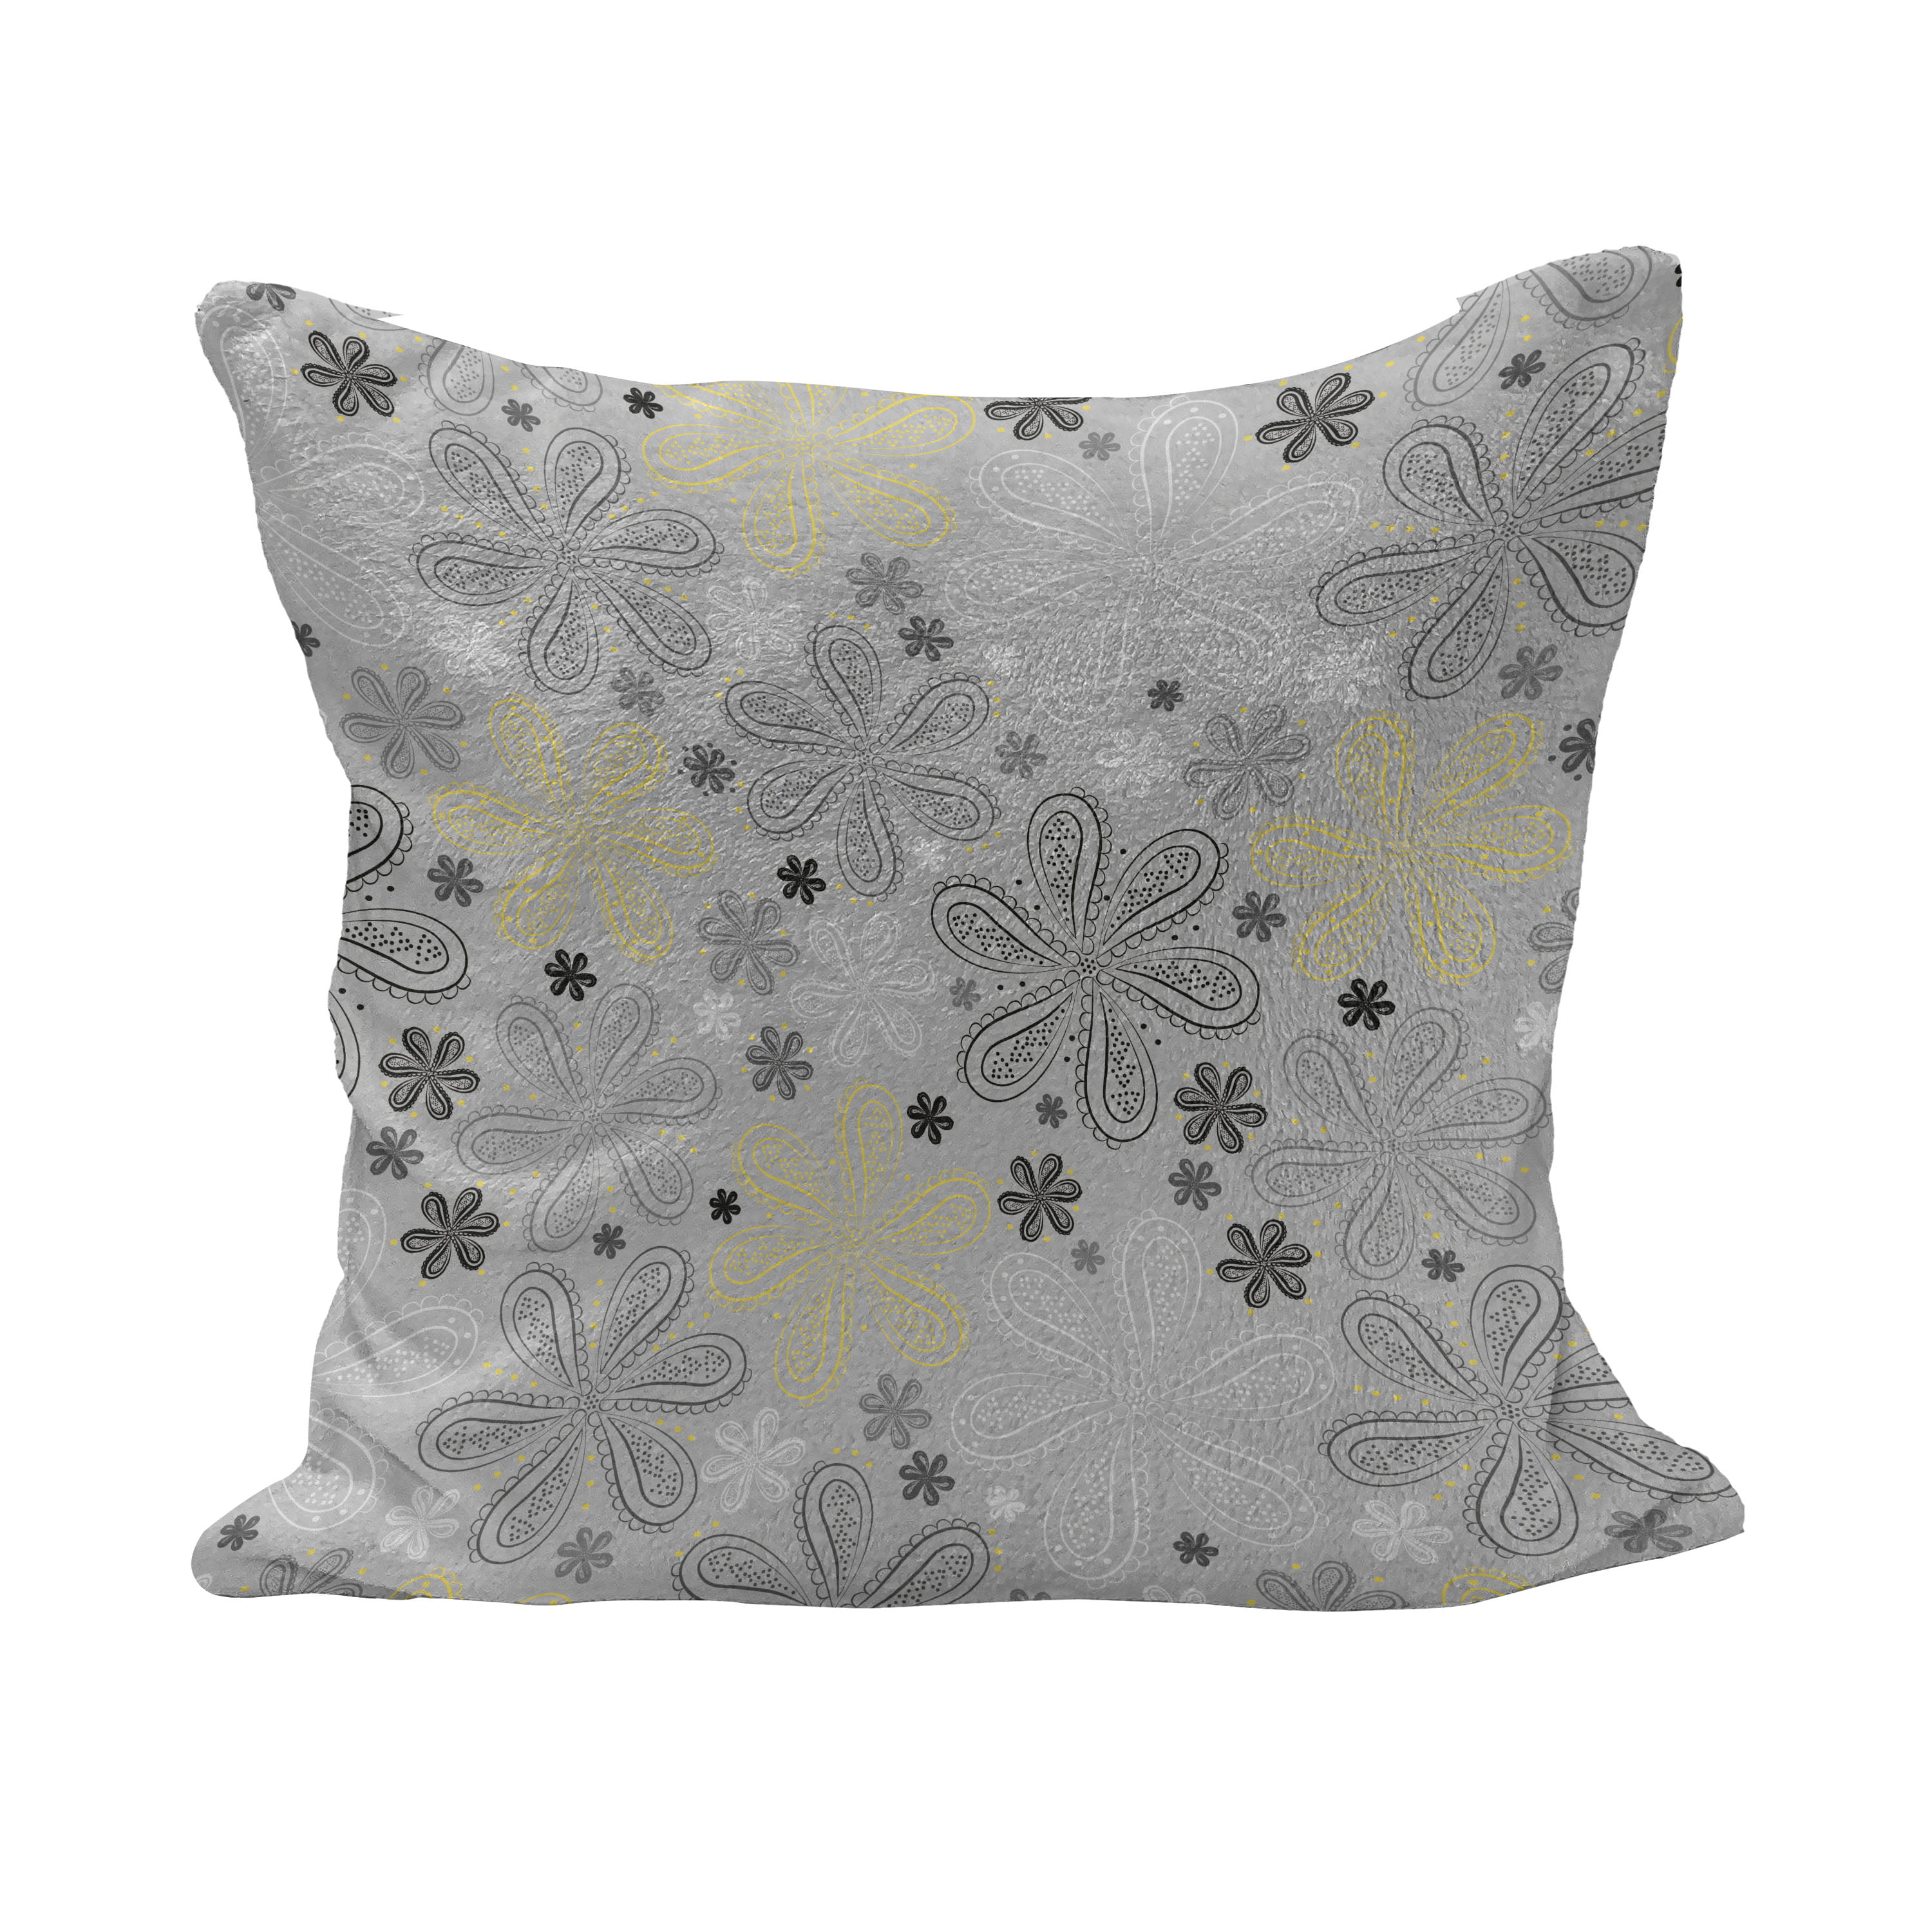 Grey spot Cushion Cover Grey Throw Pillow boho cushion cover grey cushion cover graphic print grey throw pillow